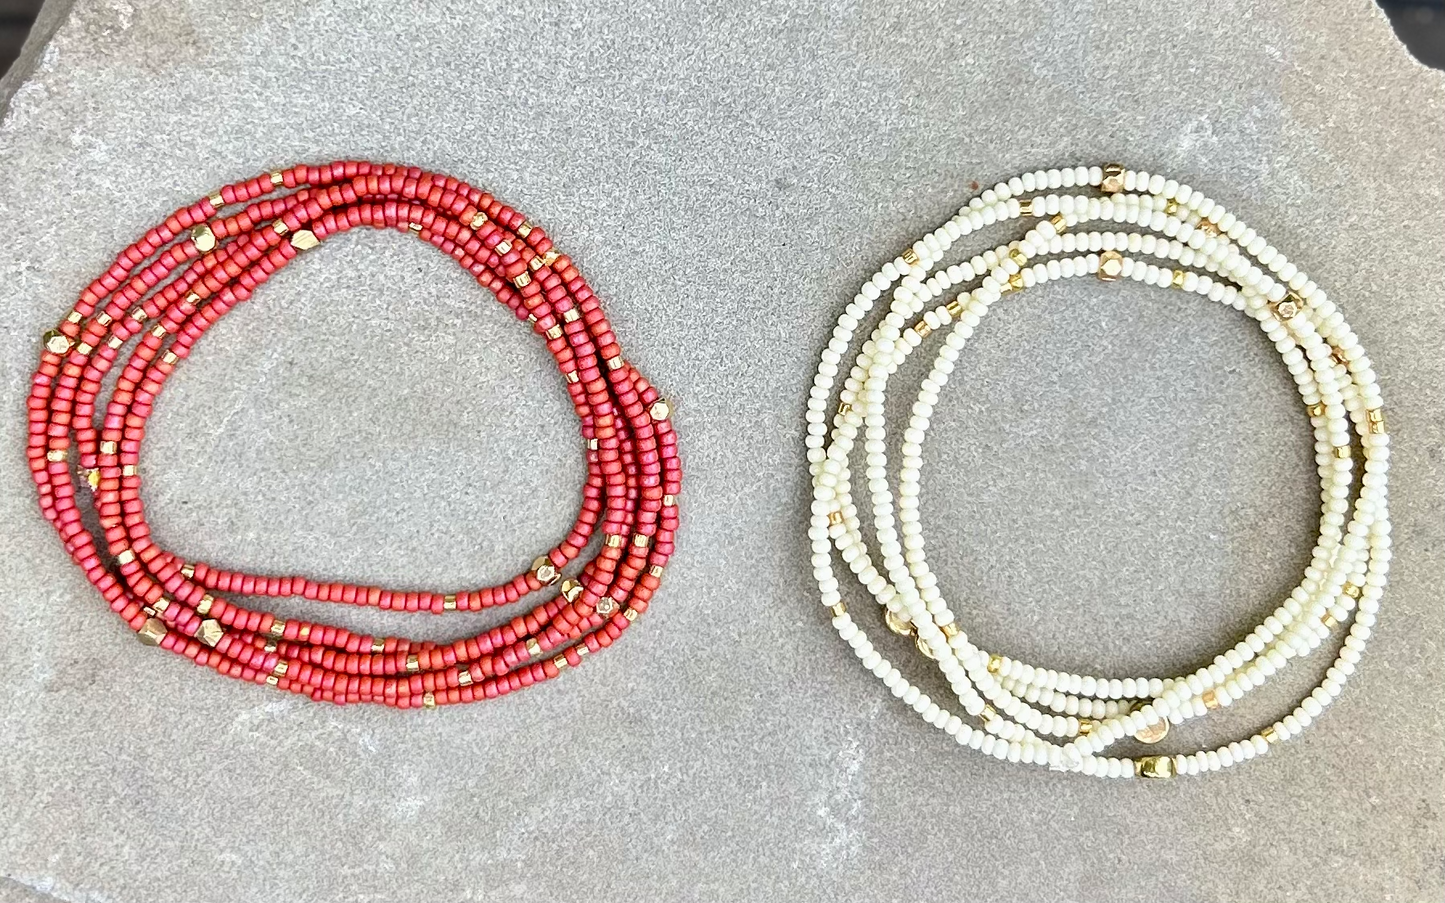 Brick Red & Gold Sprinkled Beaded 5-Wrap Bracelet